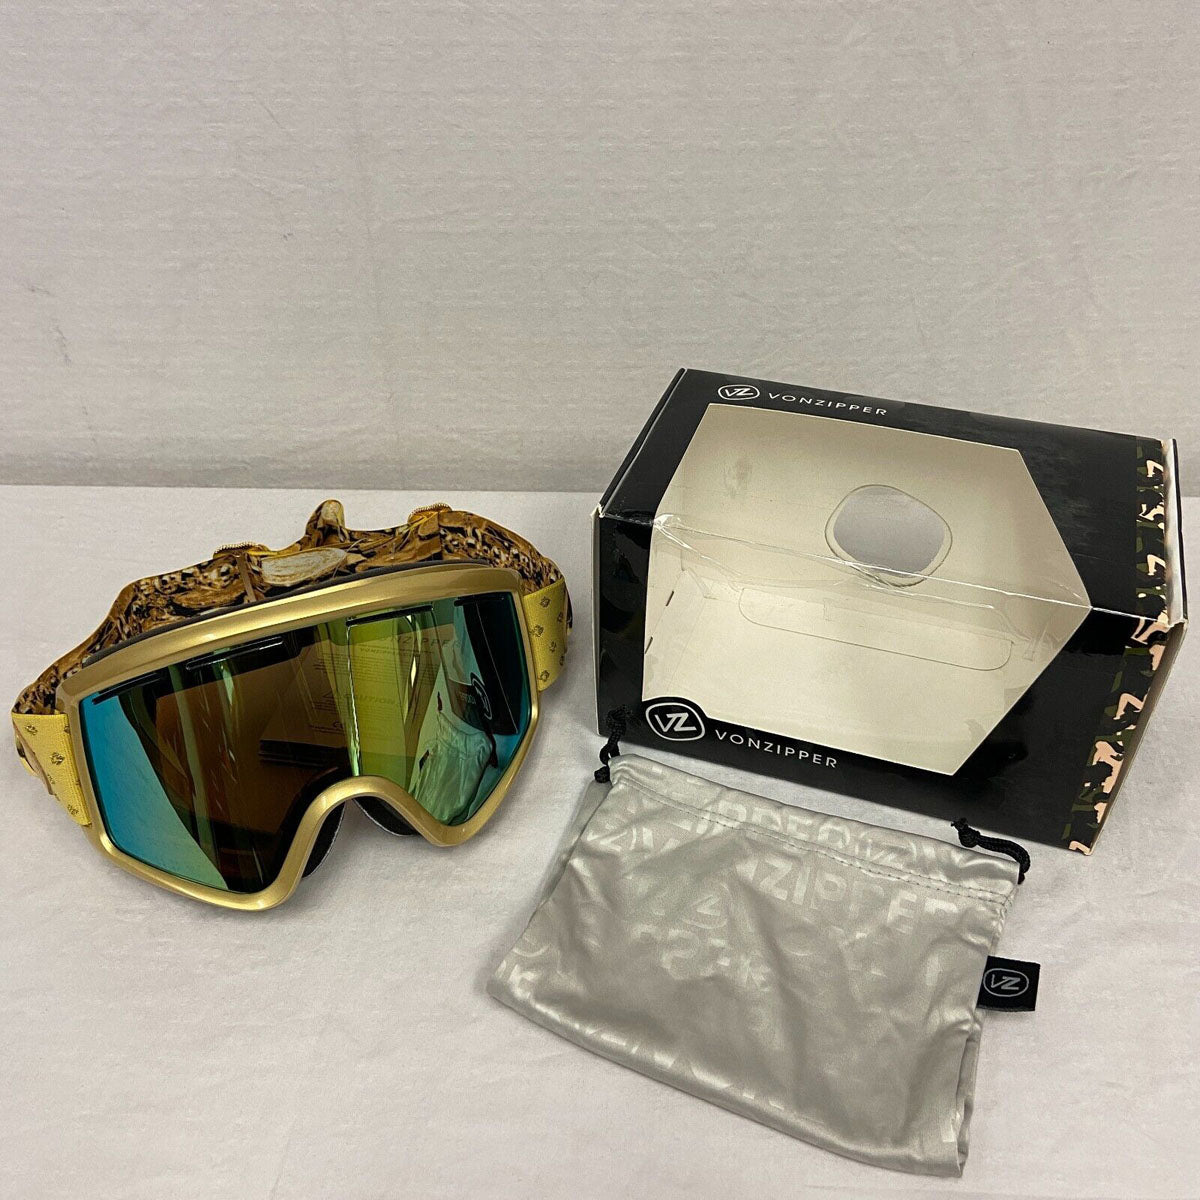 VonZipper Cleaver Snow Goggles - Glam Gold / Gold Chrome Lens (OPEN-BOX) - ExtremeSupply.com